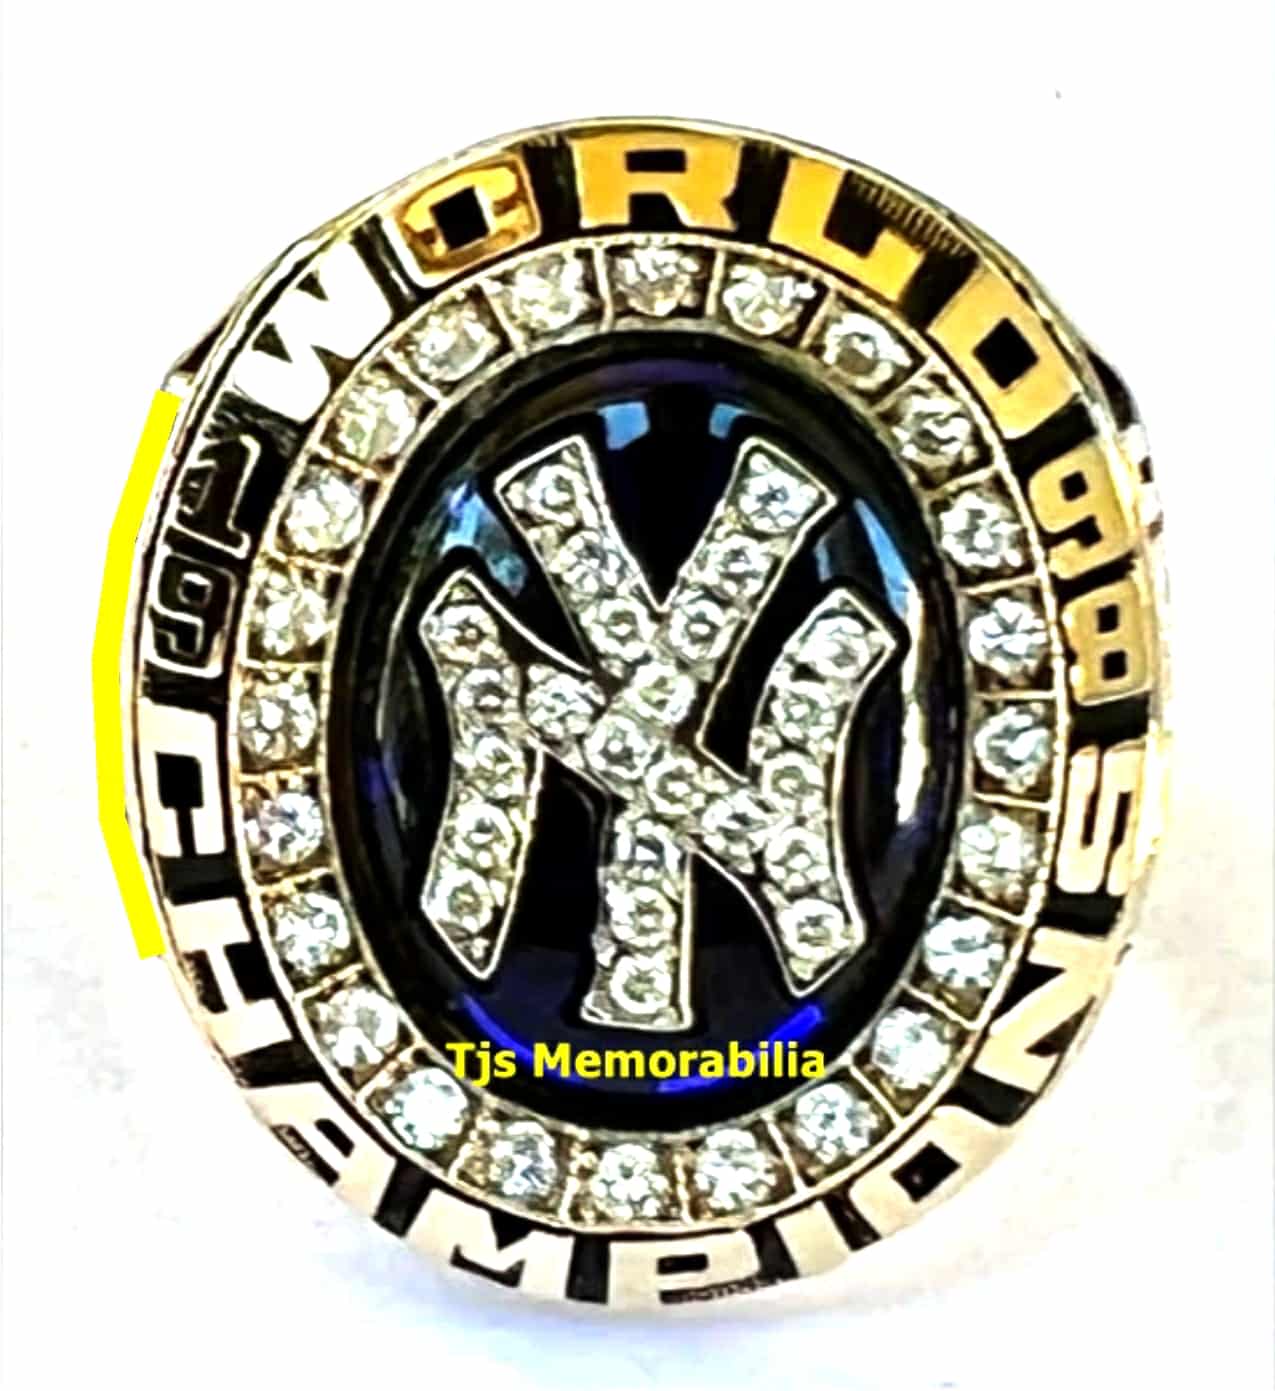 1998 NEW YORK YANKEES WORLD SERIES CHAMPIONSHIP RING AND